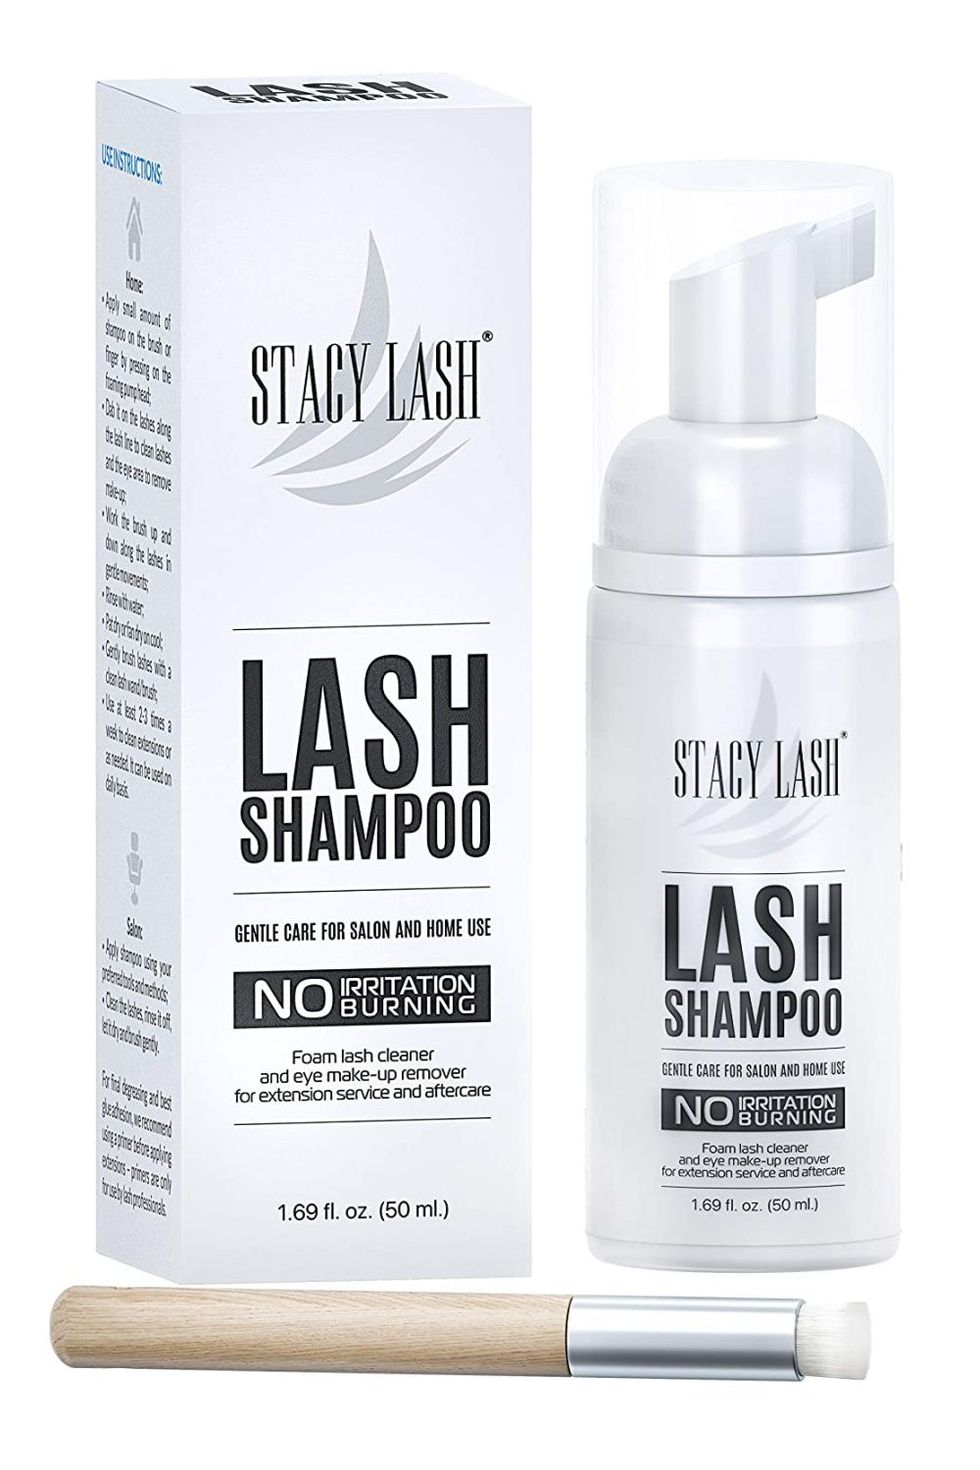 Stacy Lash Lash Shampoo